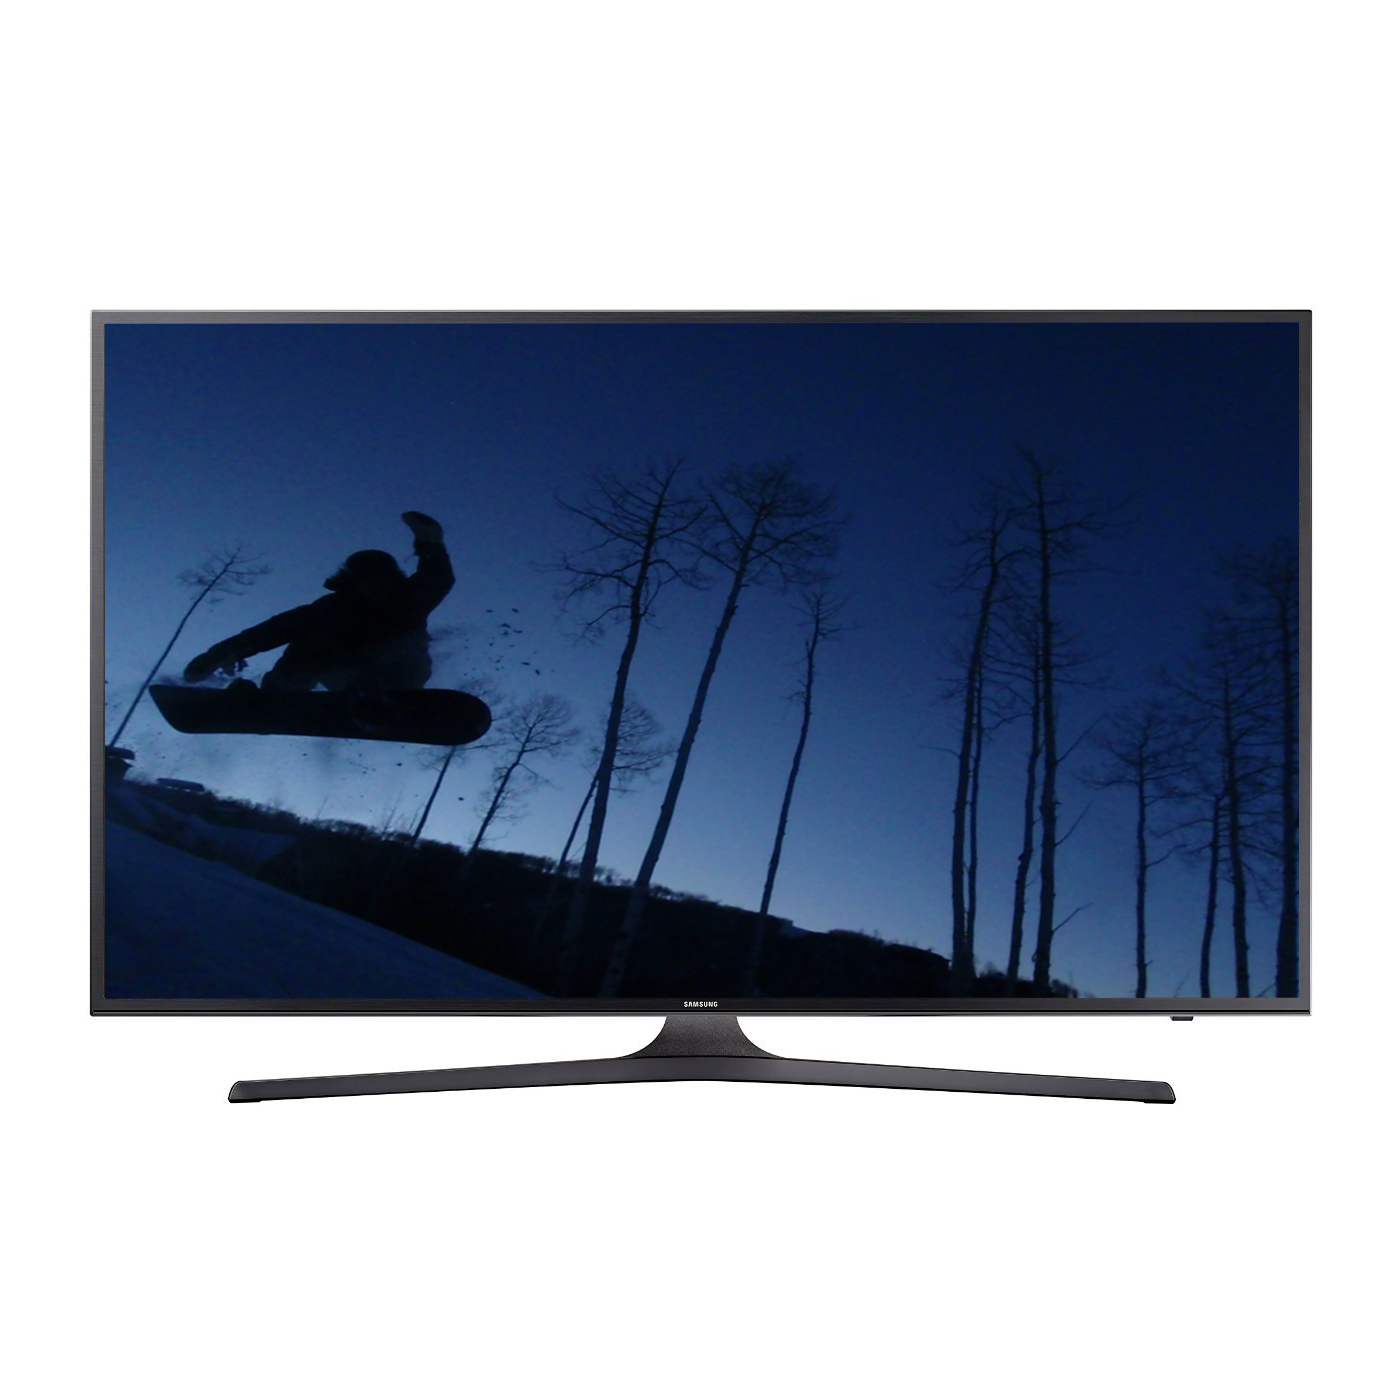 Samsung REFURBISHED55. 4K ULTRA HD SMART LED HDTV W/ WIFI-UN55KU6300FXZA